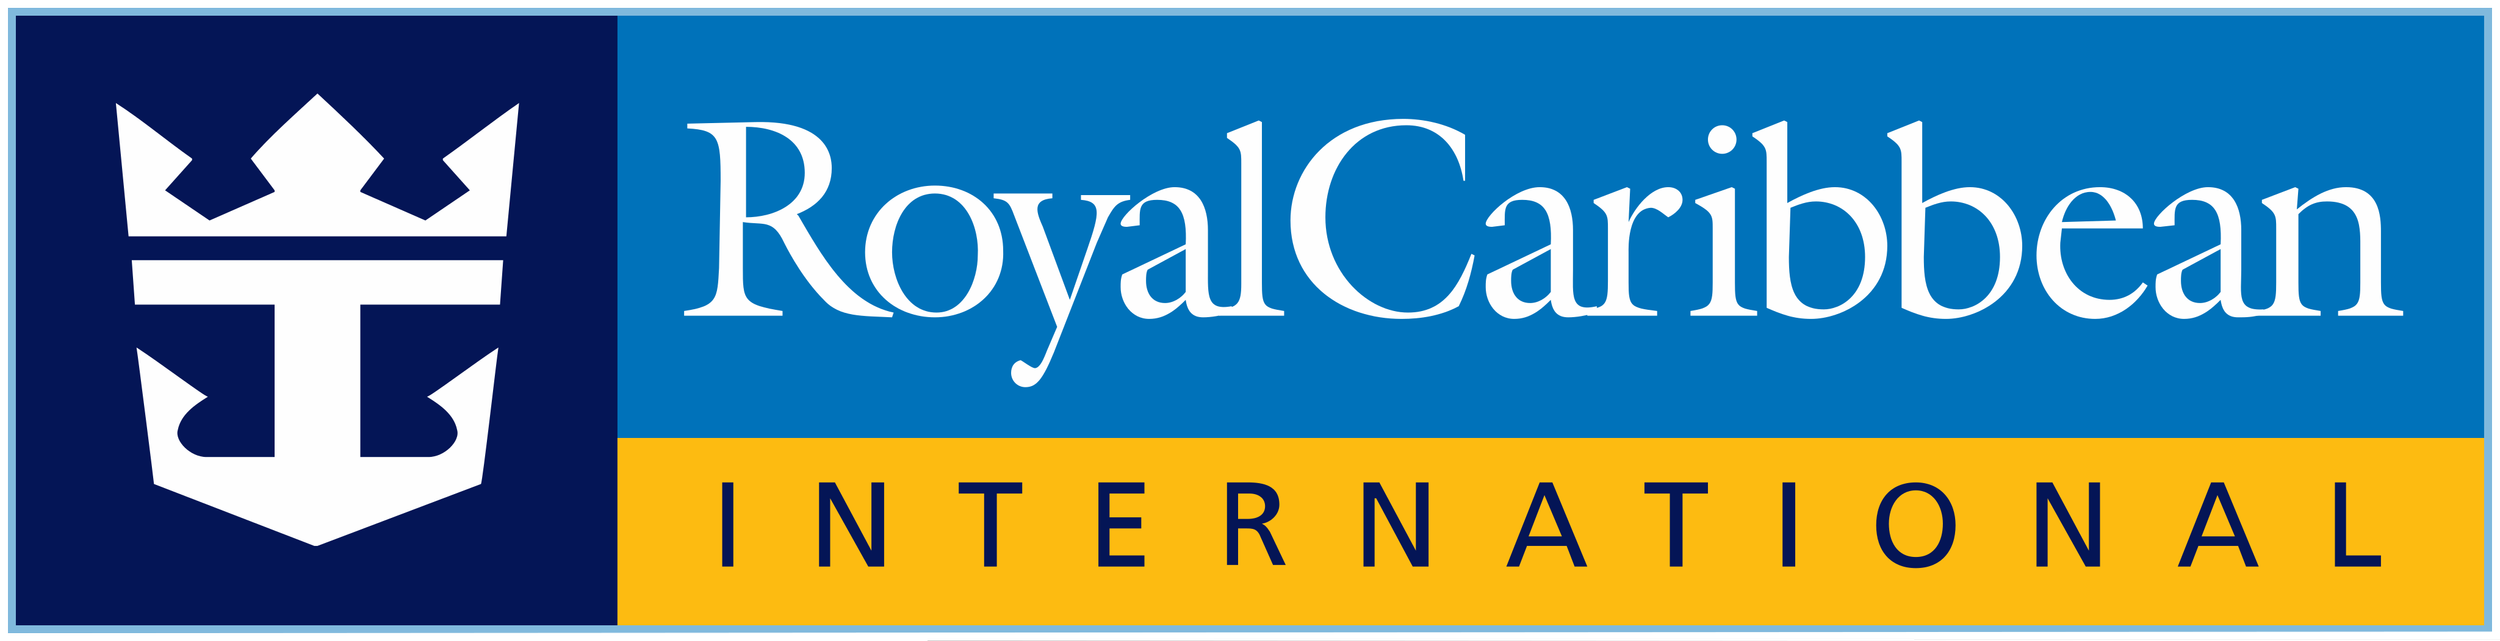 royal-caribbean-logo.png